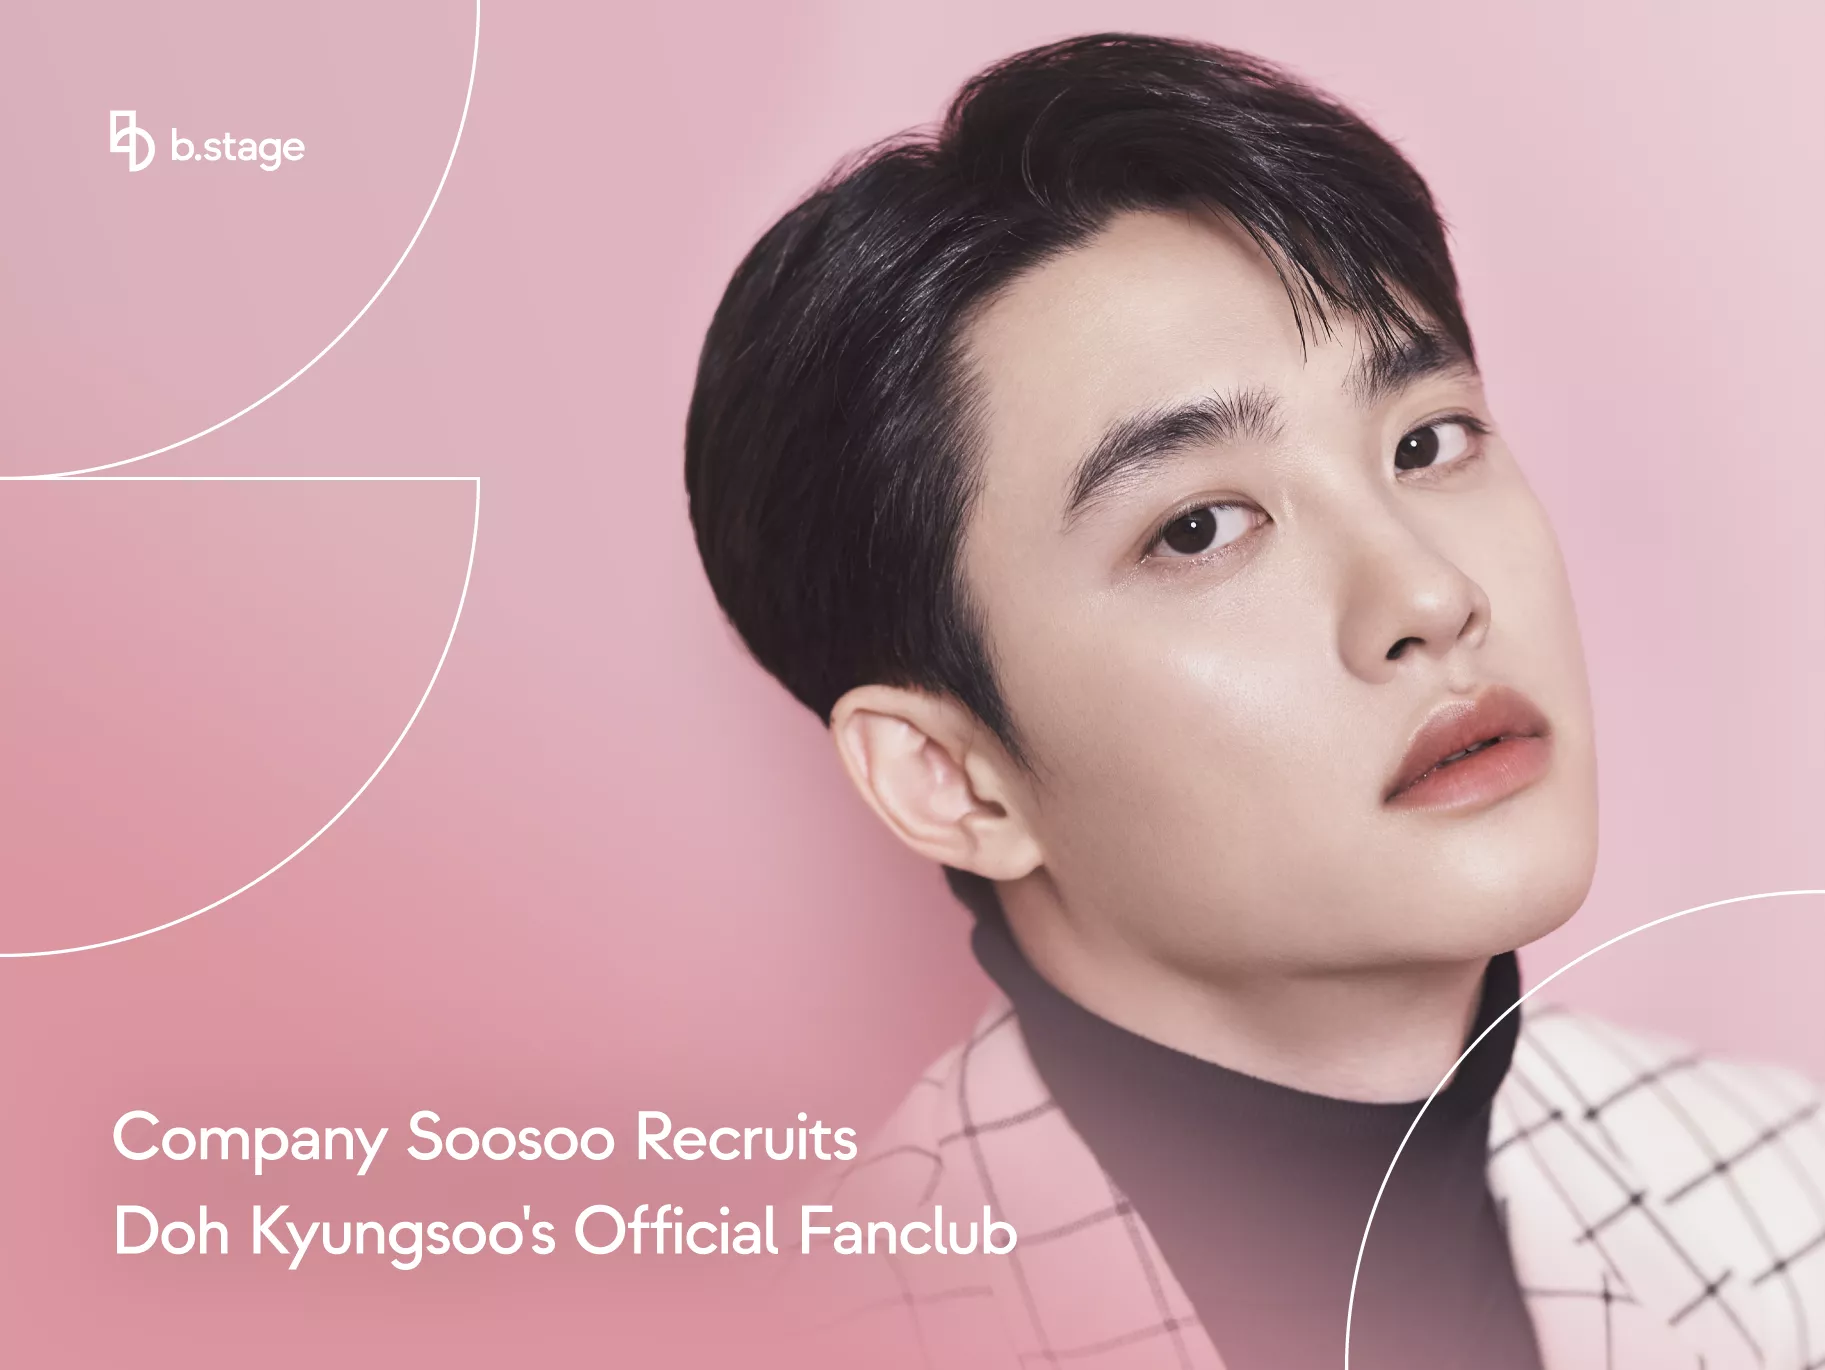 Company Soosoo набирает официальный фан-клуб До Кёнсу через b.stage